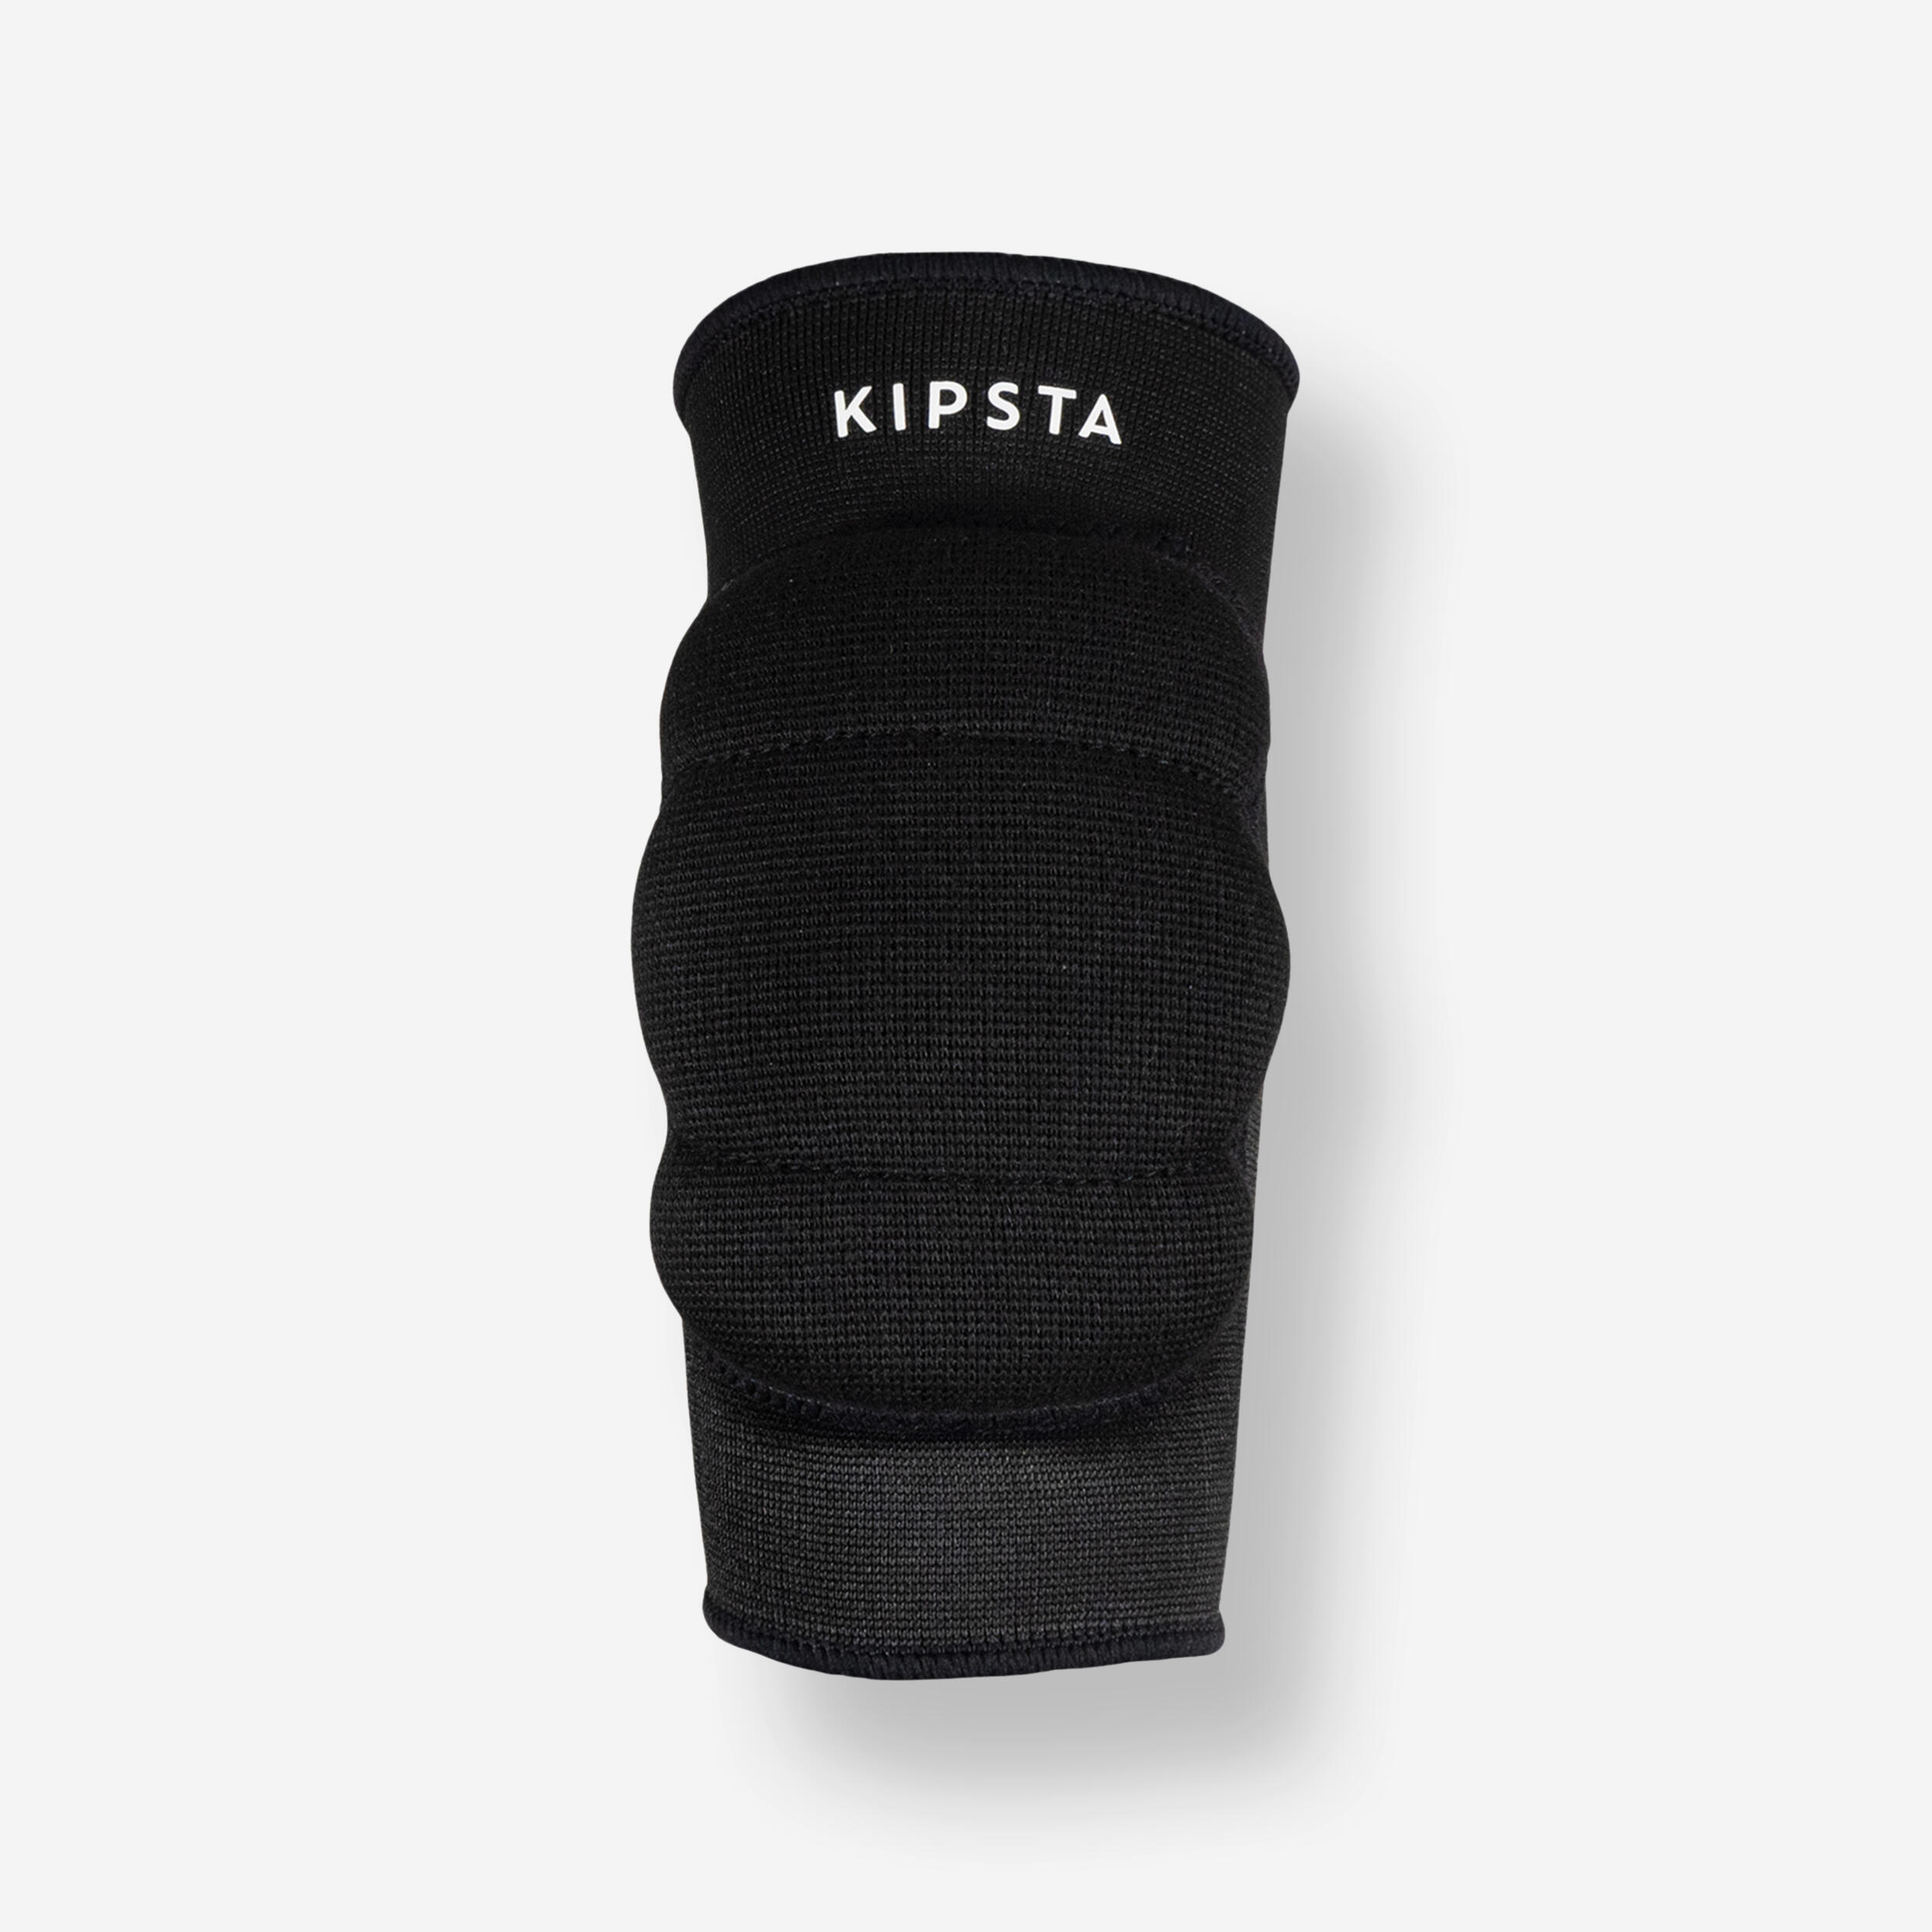 KIPSTA Volleyball Knee Pads VKP100 - Black